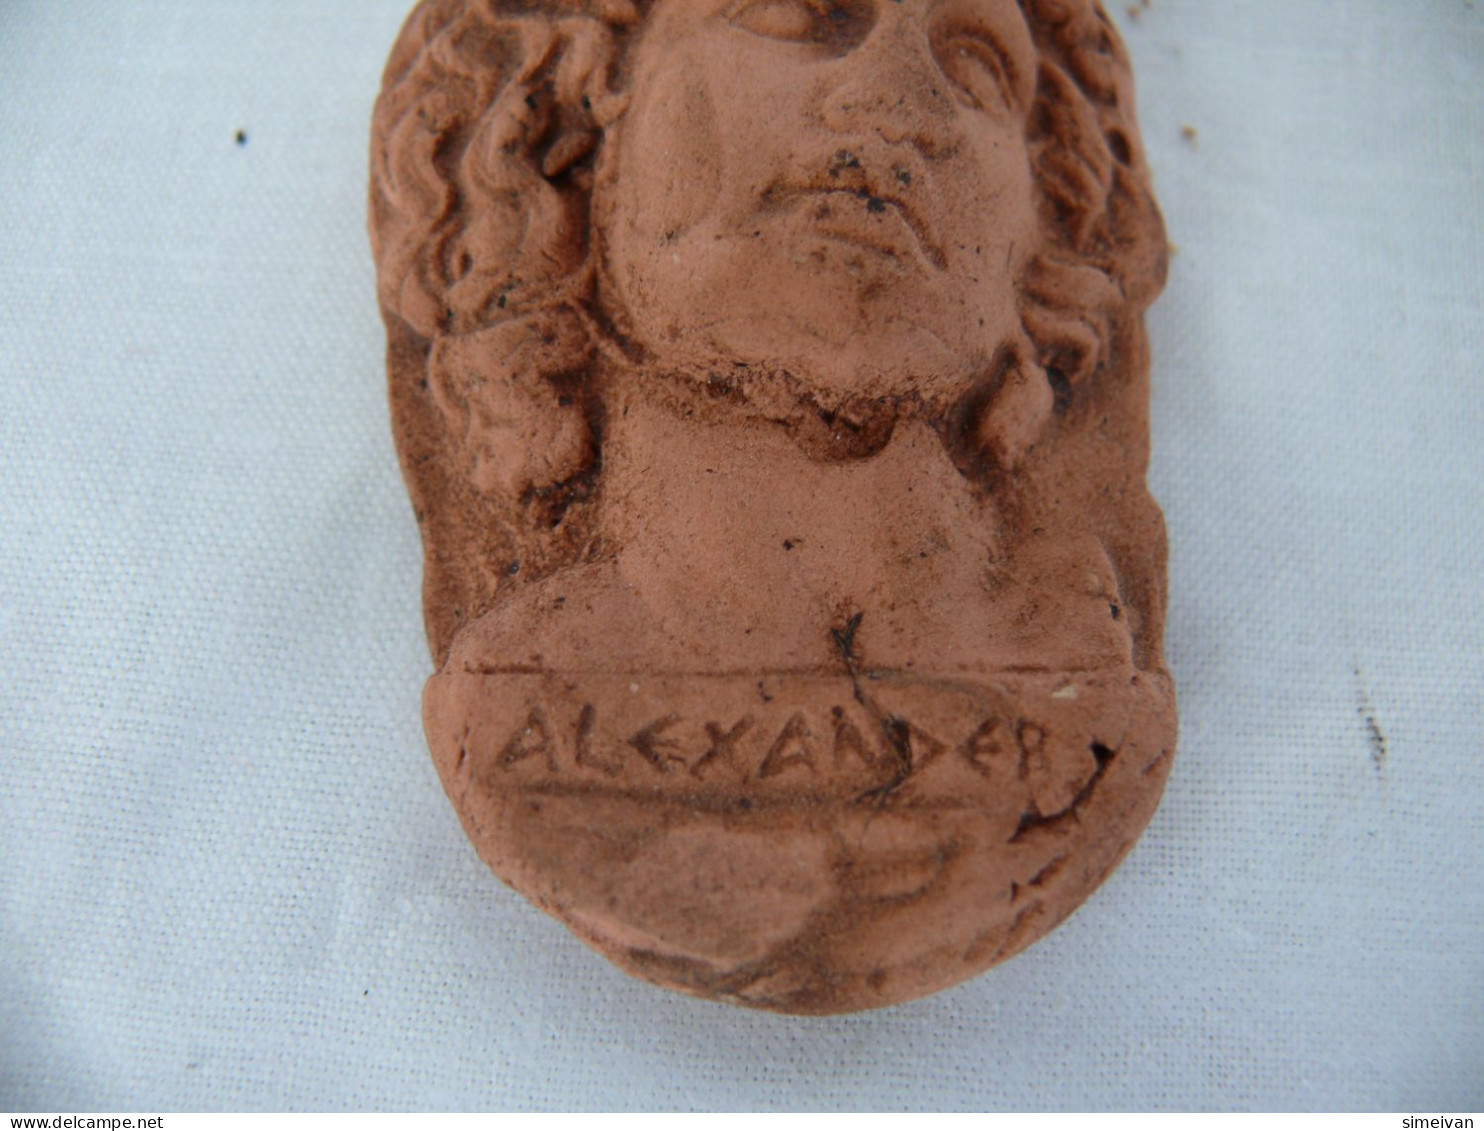 Beautiful Souvenir Alexander The Great Clay Figure #1402 - Personen